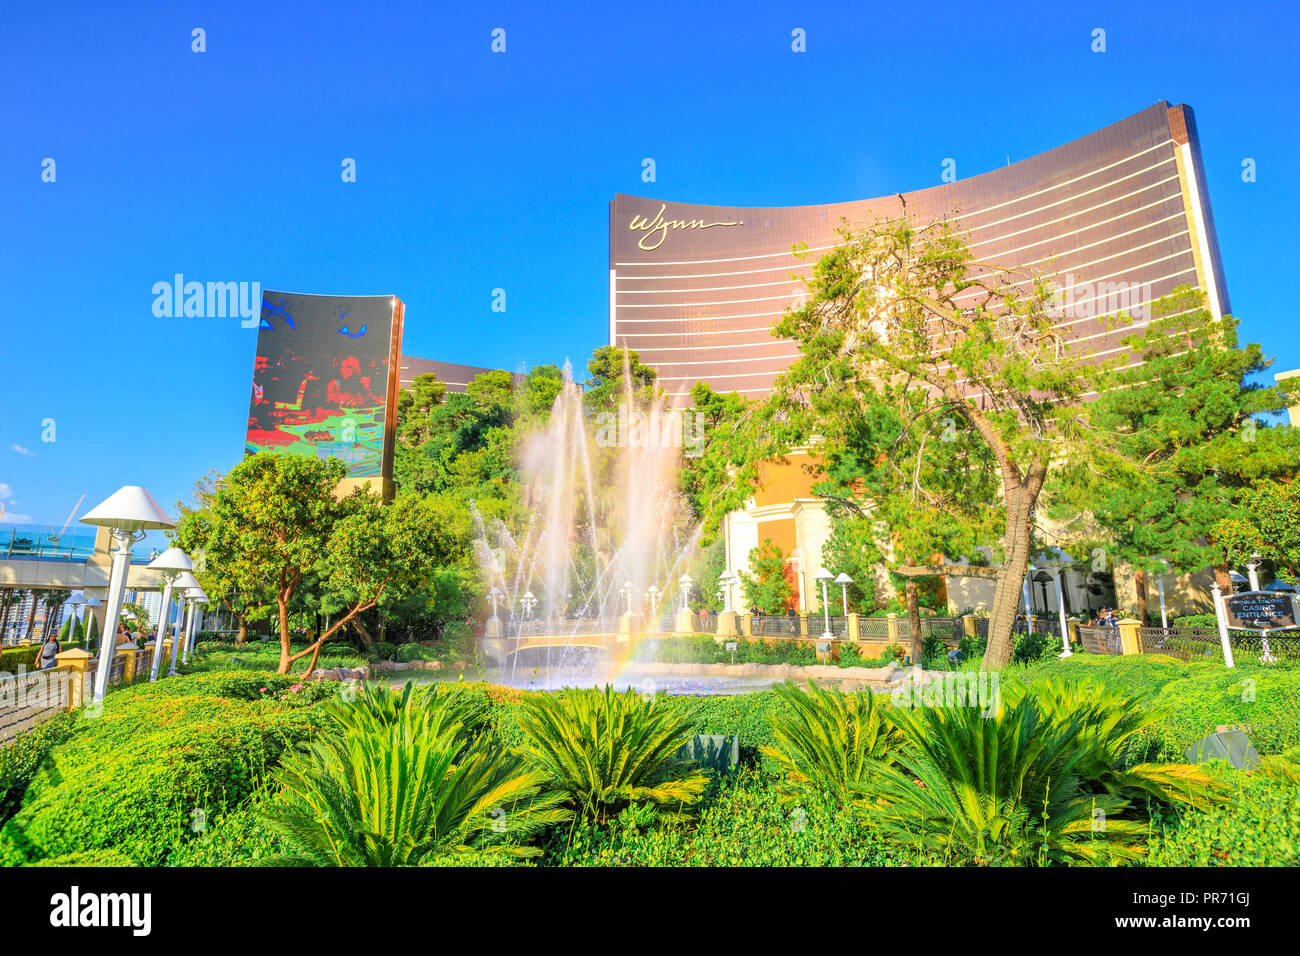 Las Vegas, Nevada, United States - August 18, 2018: Wynn Las Vegas Fountain Show with rainbow in blue sky. The Wynn is Resort Hotel Casino, a 5-star in Las Vegas Strip. Stock Photo